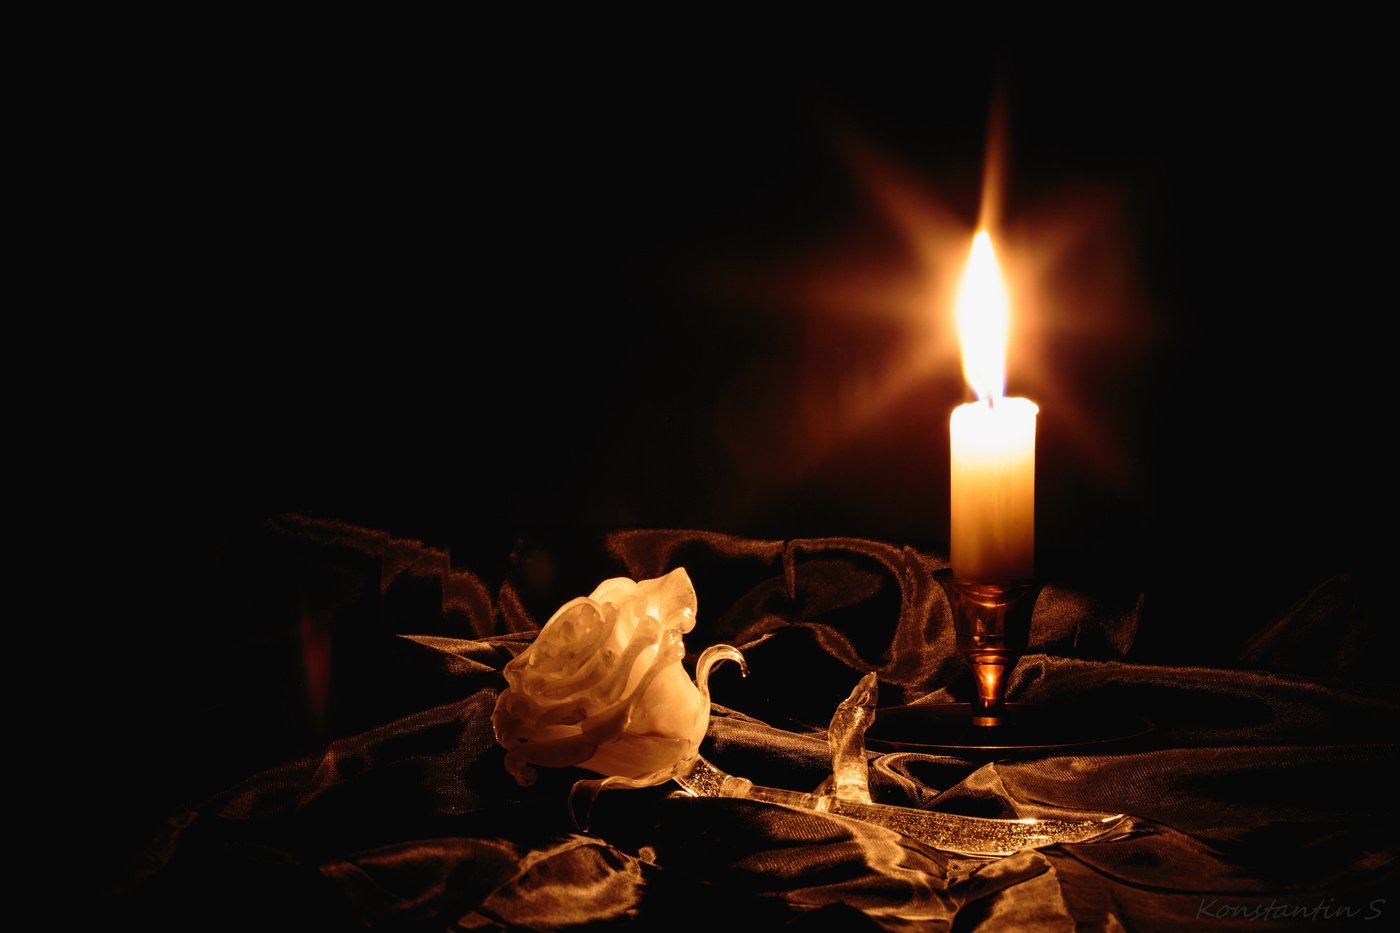 Черная траурная лента, цветы и свечи на гранж-фоне